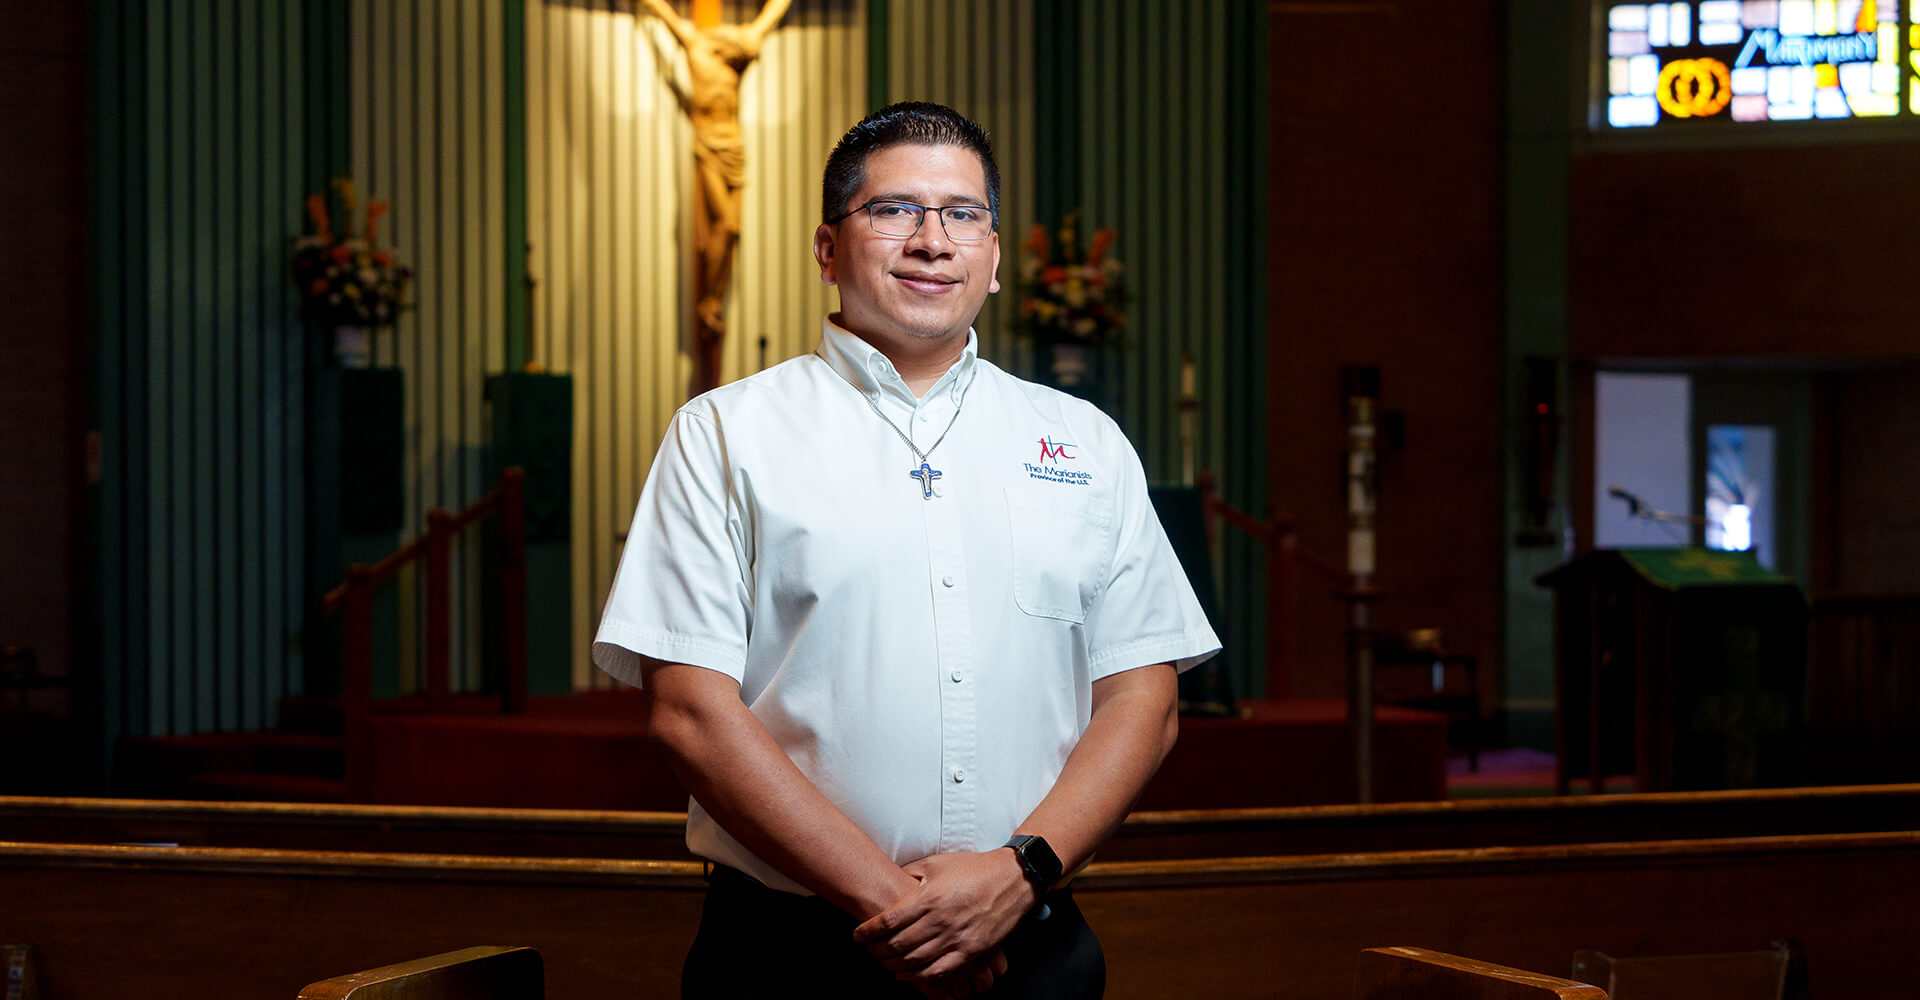 Guillermo “Memo” Peña Contreras poses inside a chapel sanctuary